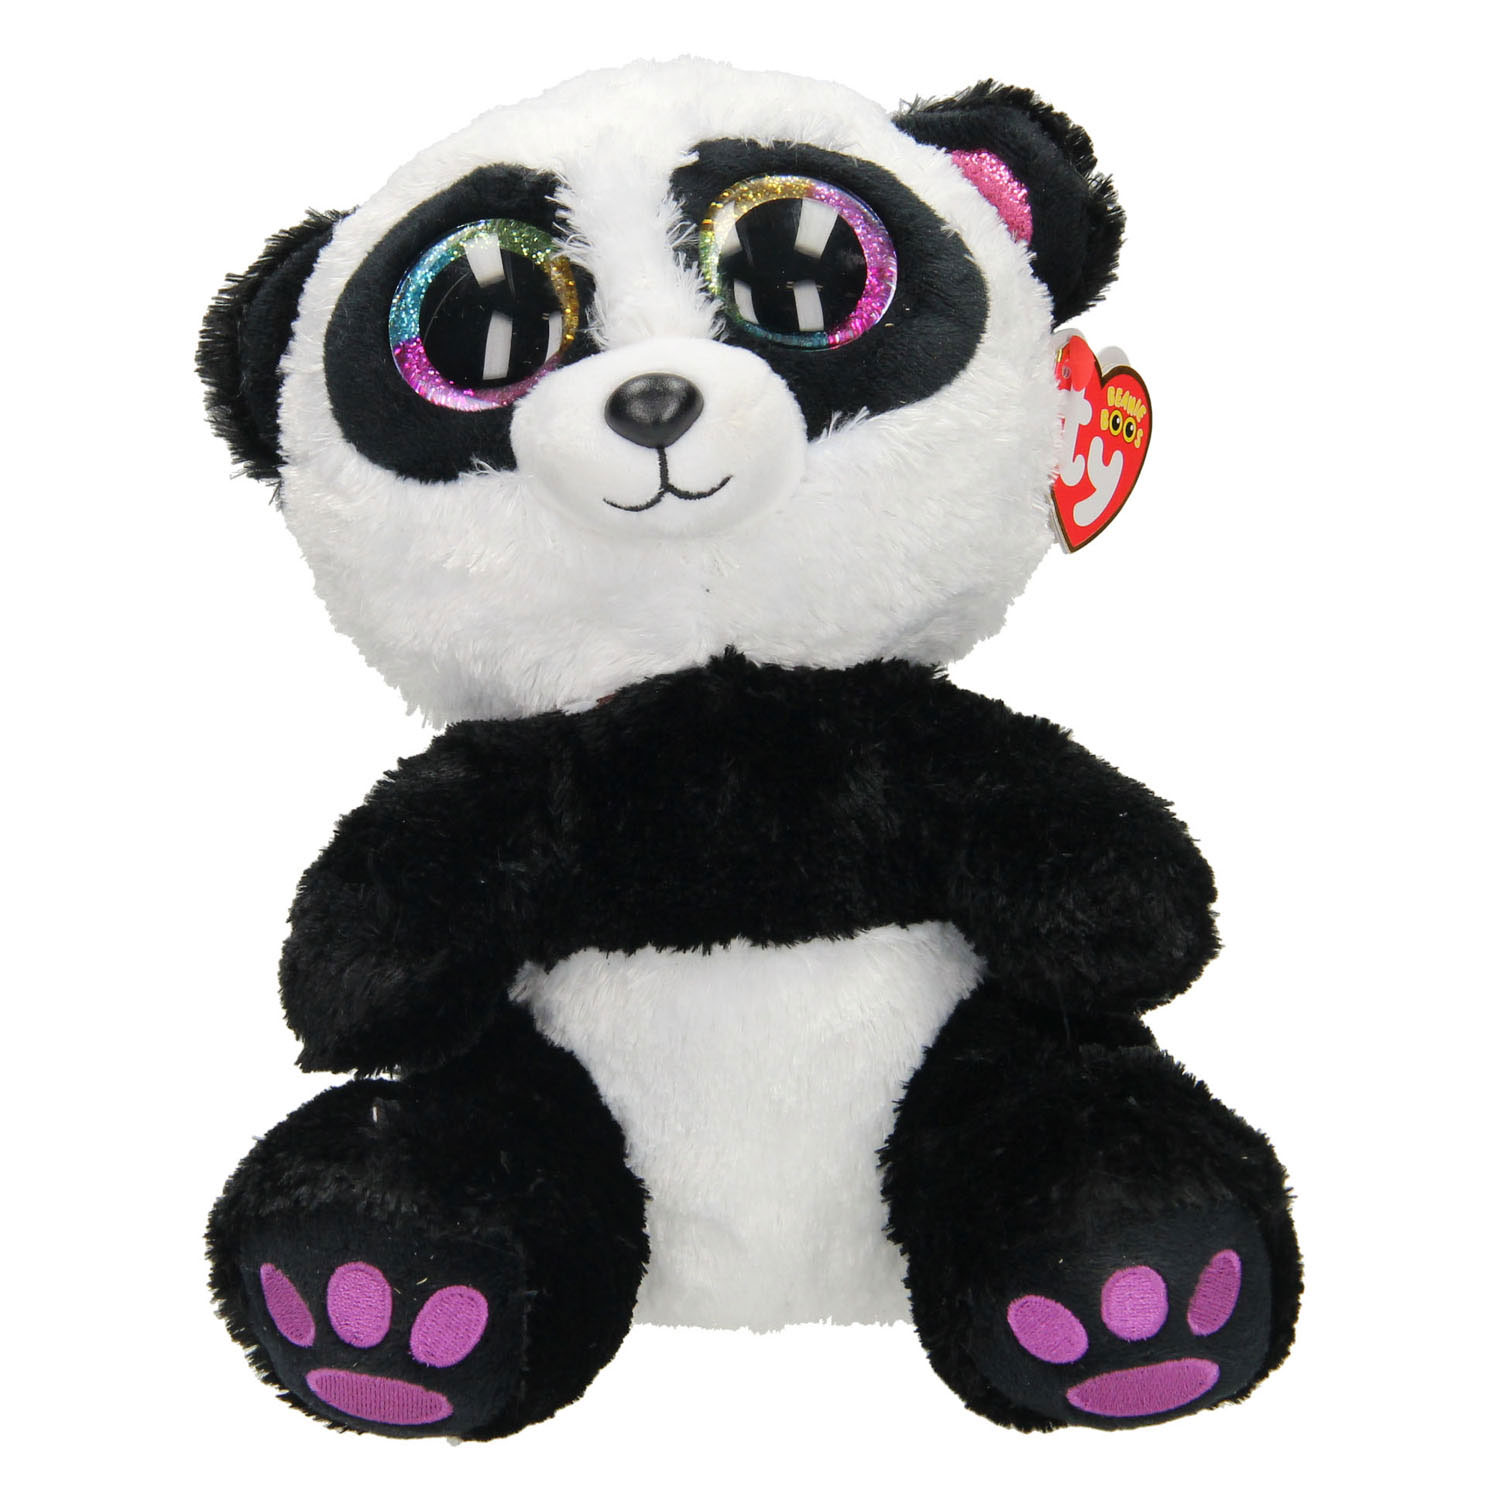 Ty Beanie Buddy Paris Panda, 24 cm